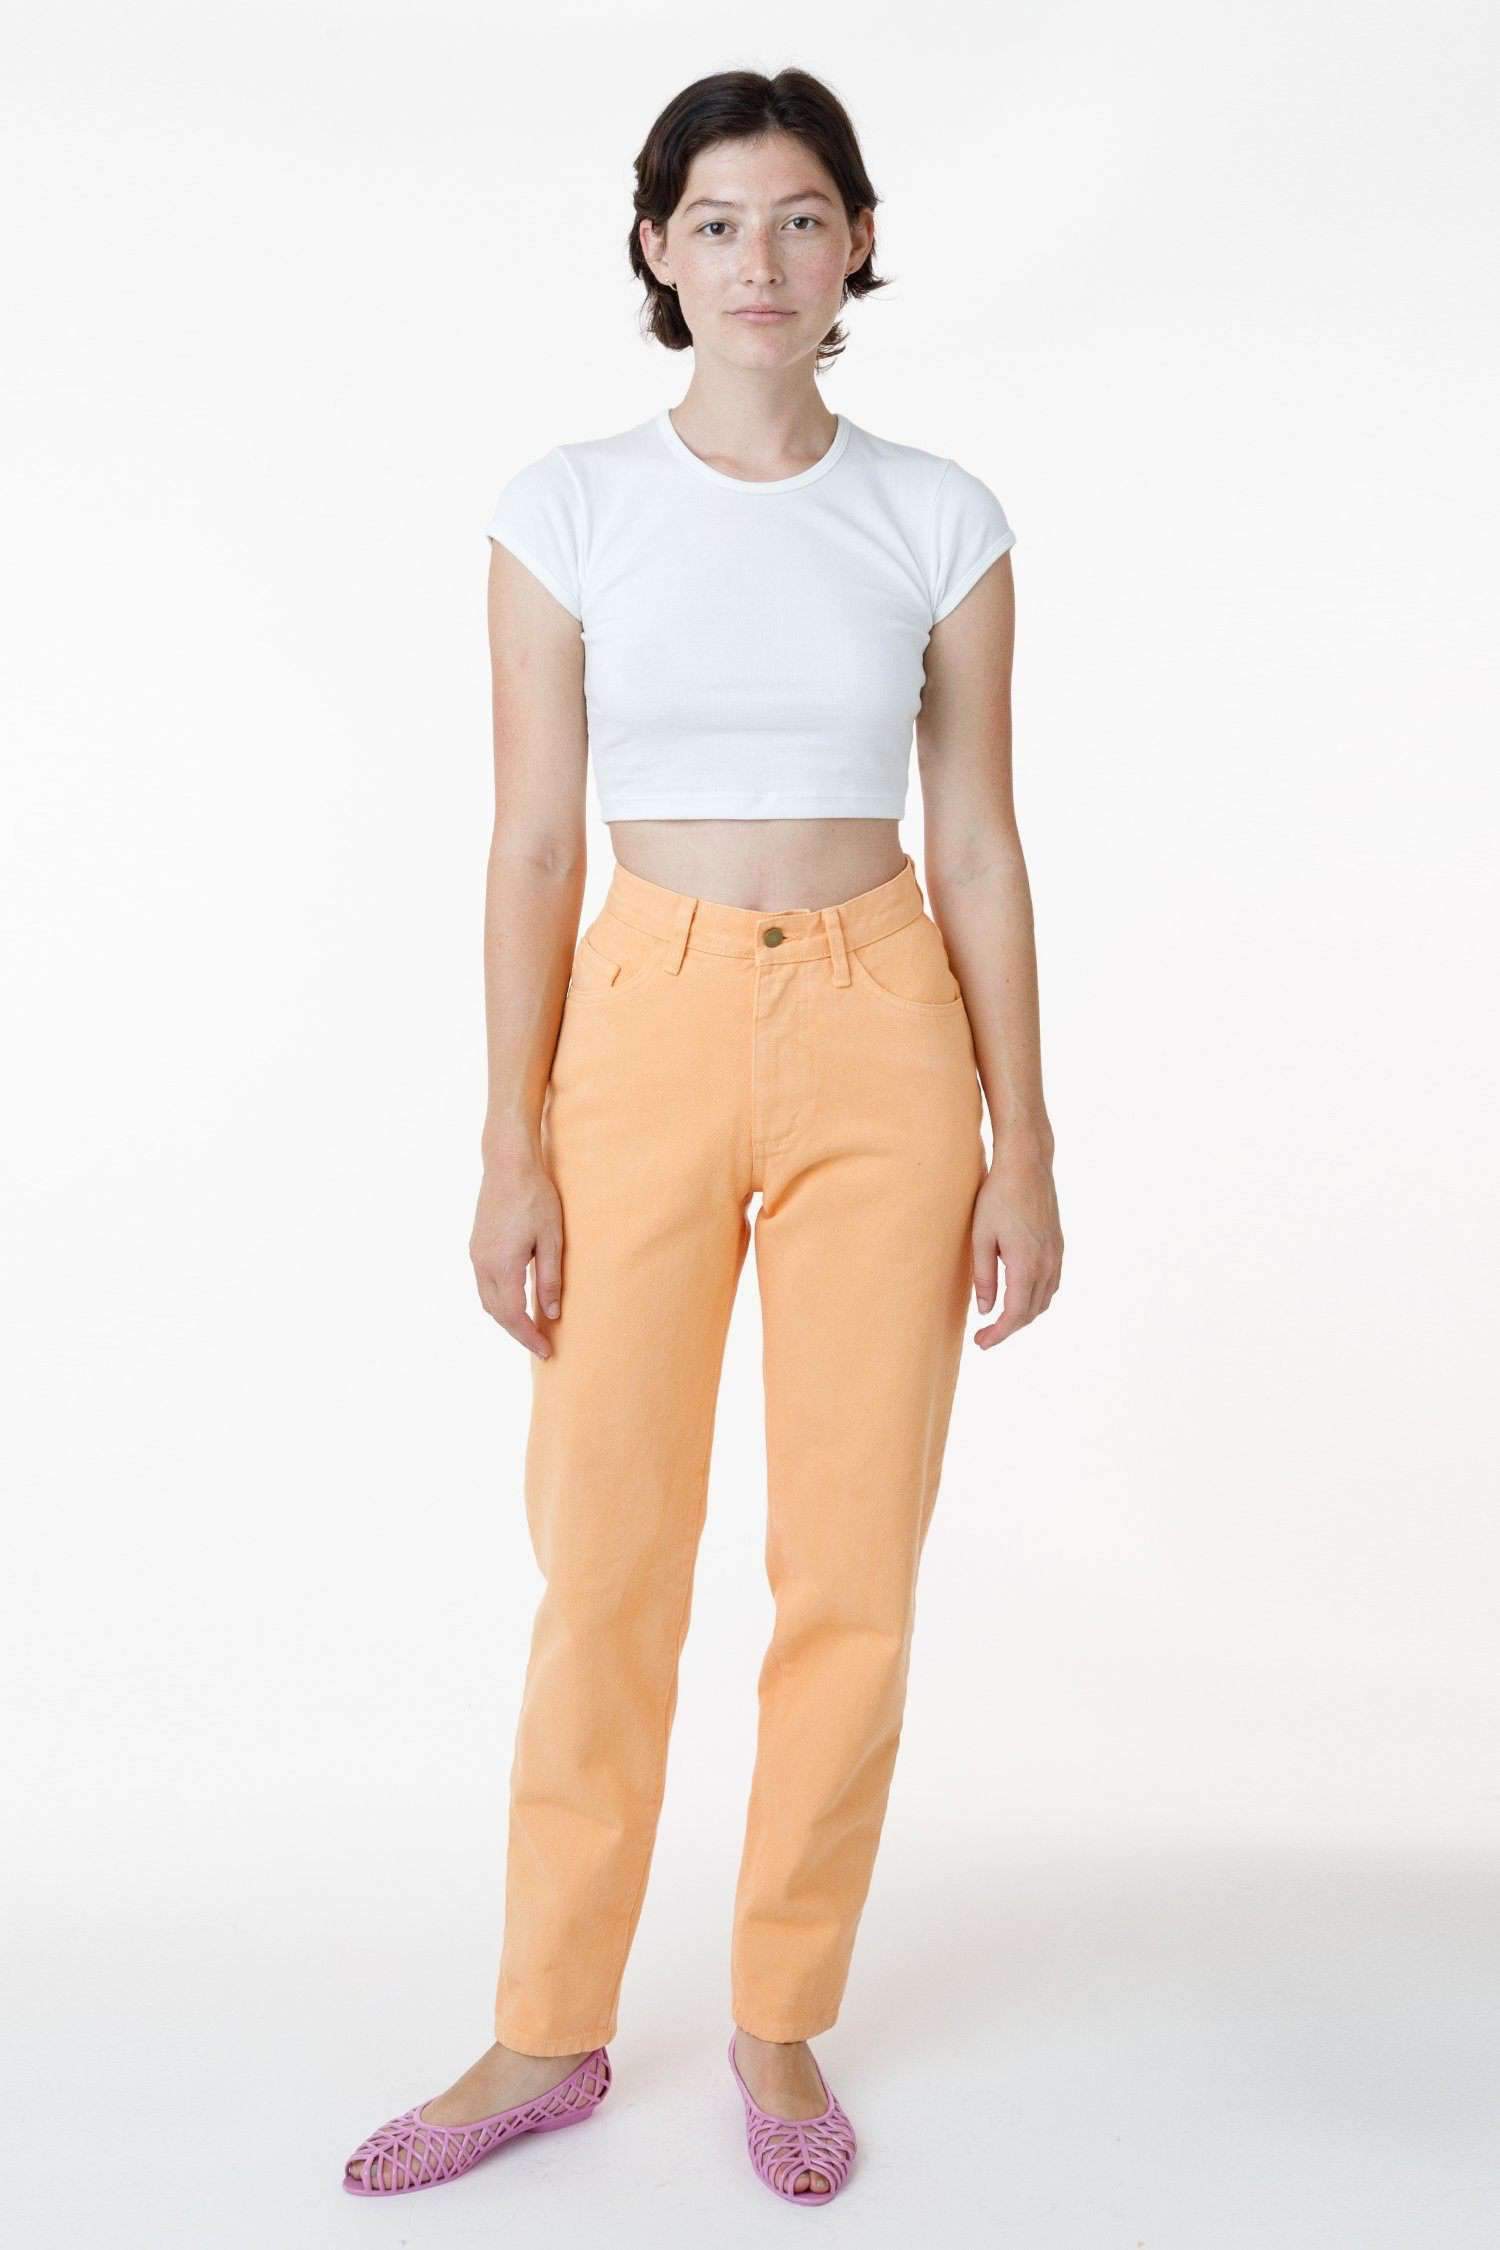 RBDW01GD - Garment Dye Women's Relaxed Fit Bull Denim Jean (Limited Edition) Jeans Los Angeles Apparel Orange Chiffon 24/28 